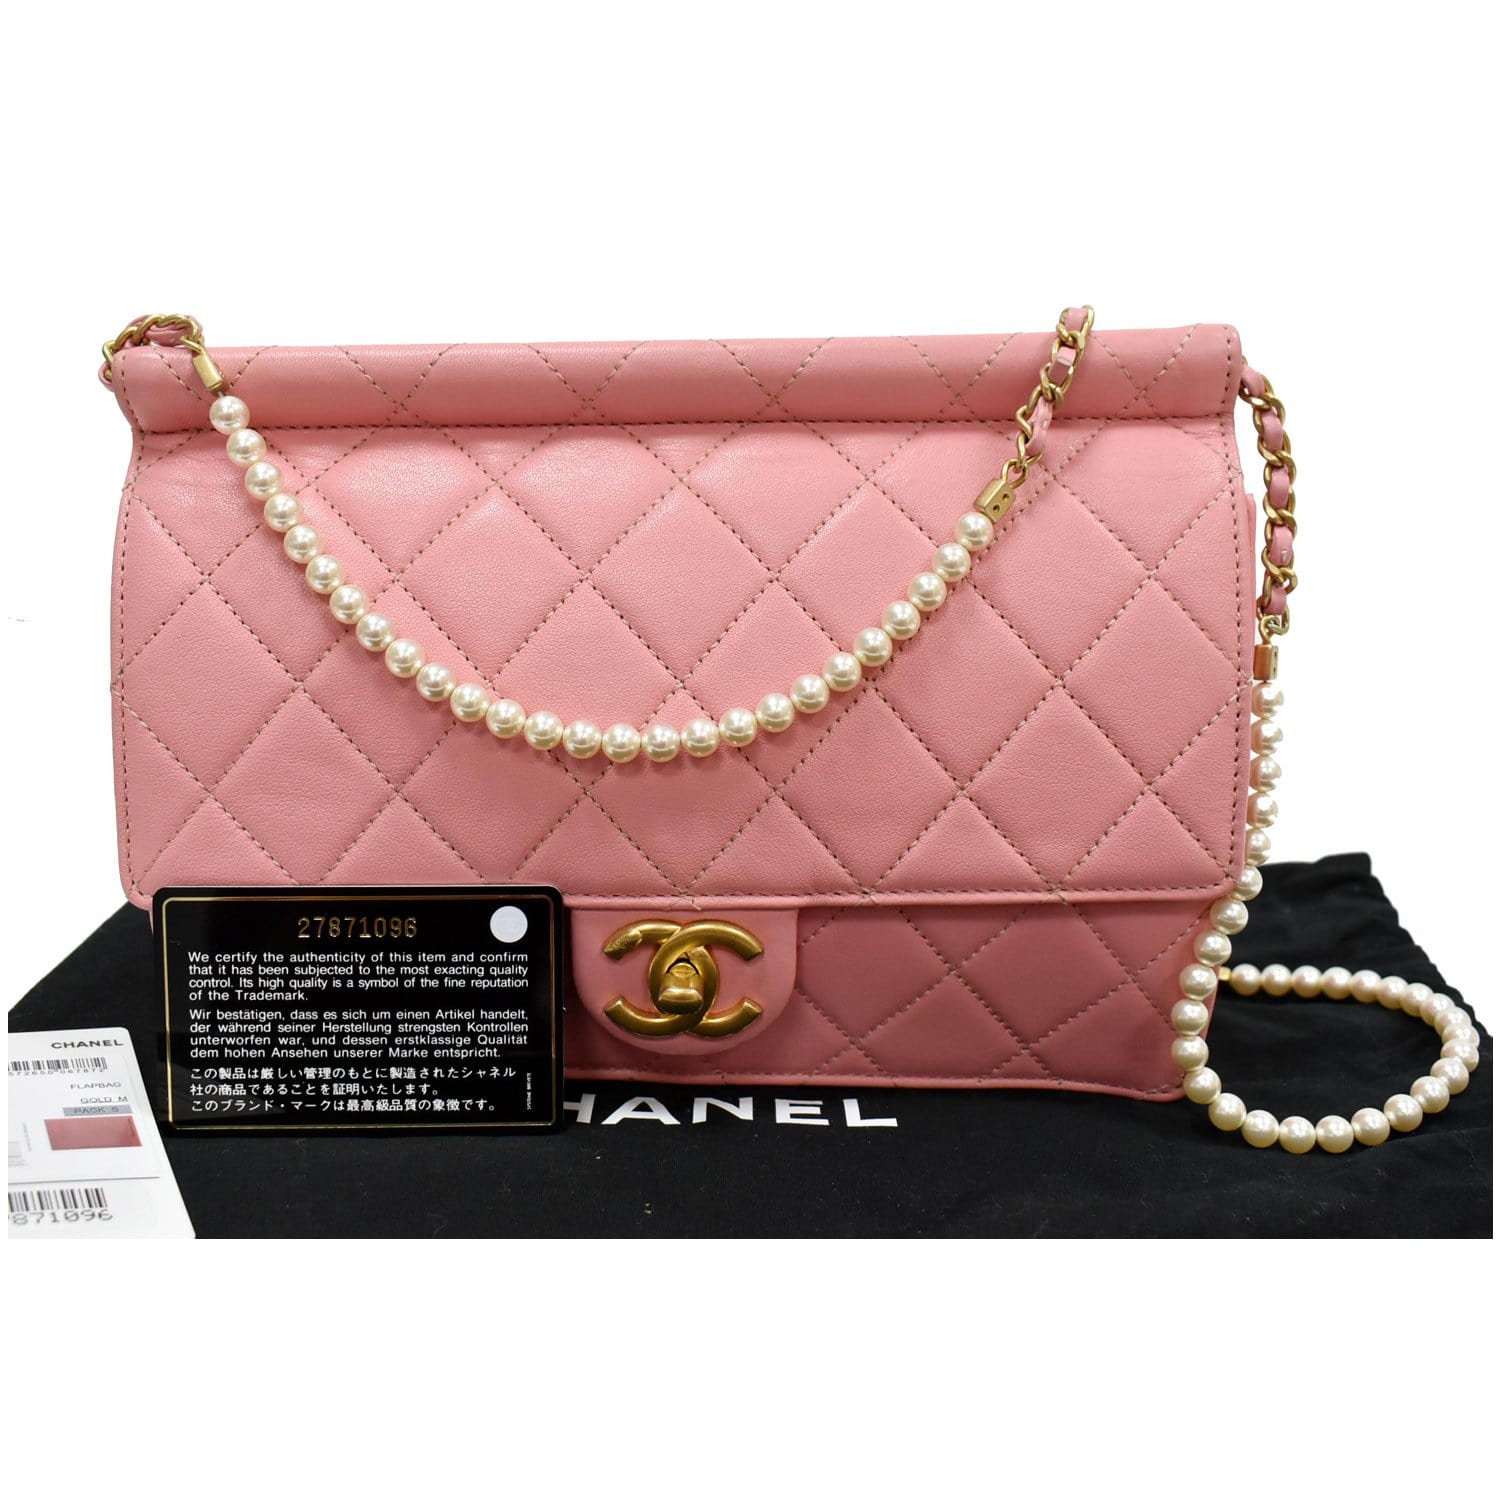 The Chanel Handbag Costume